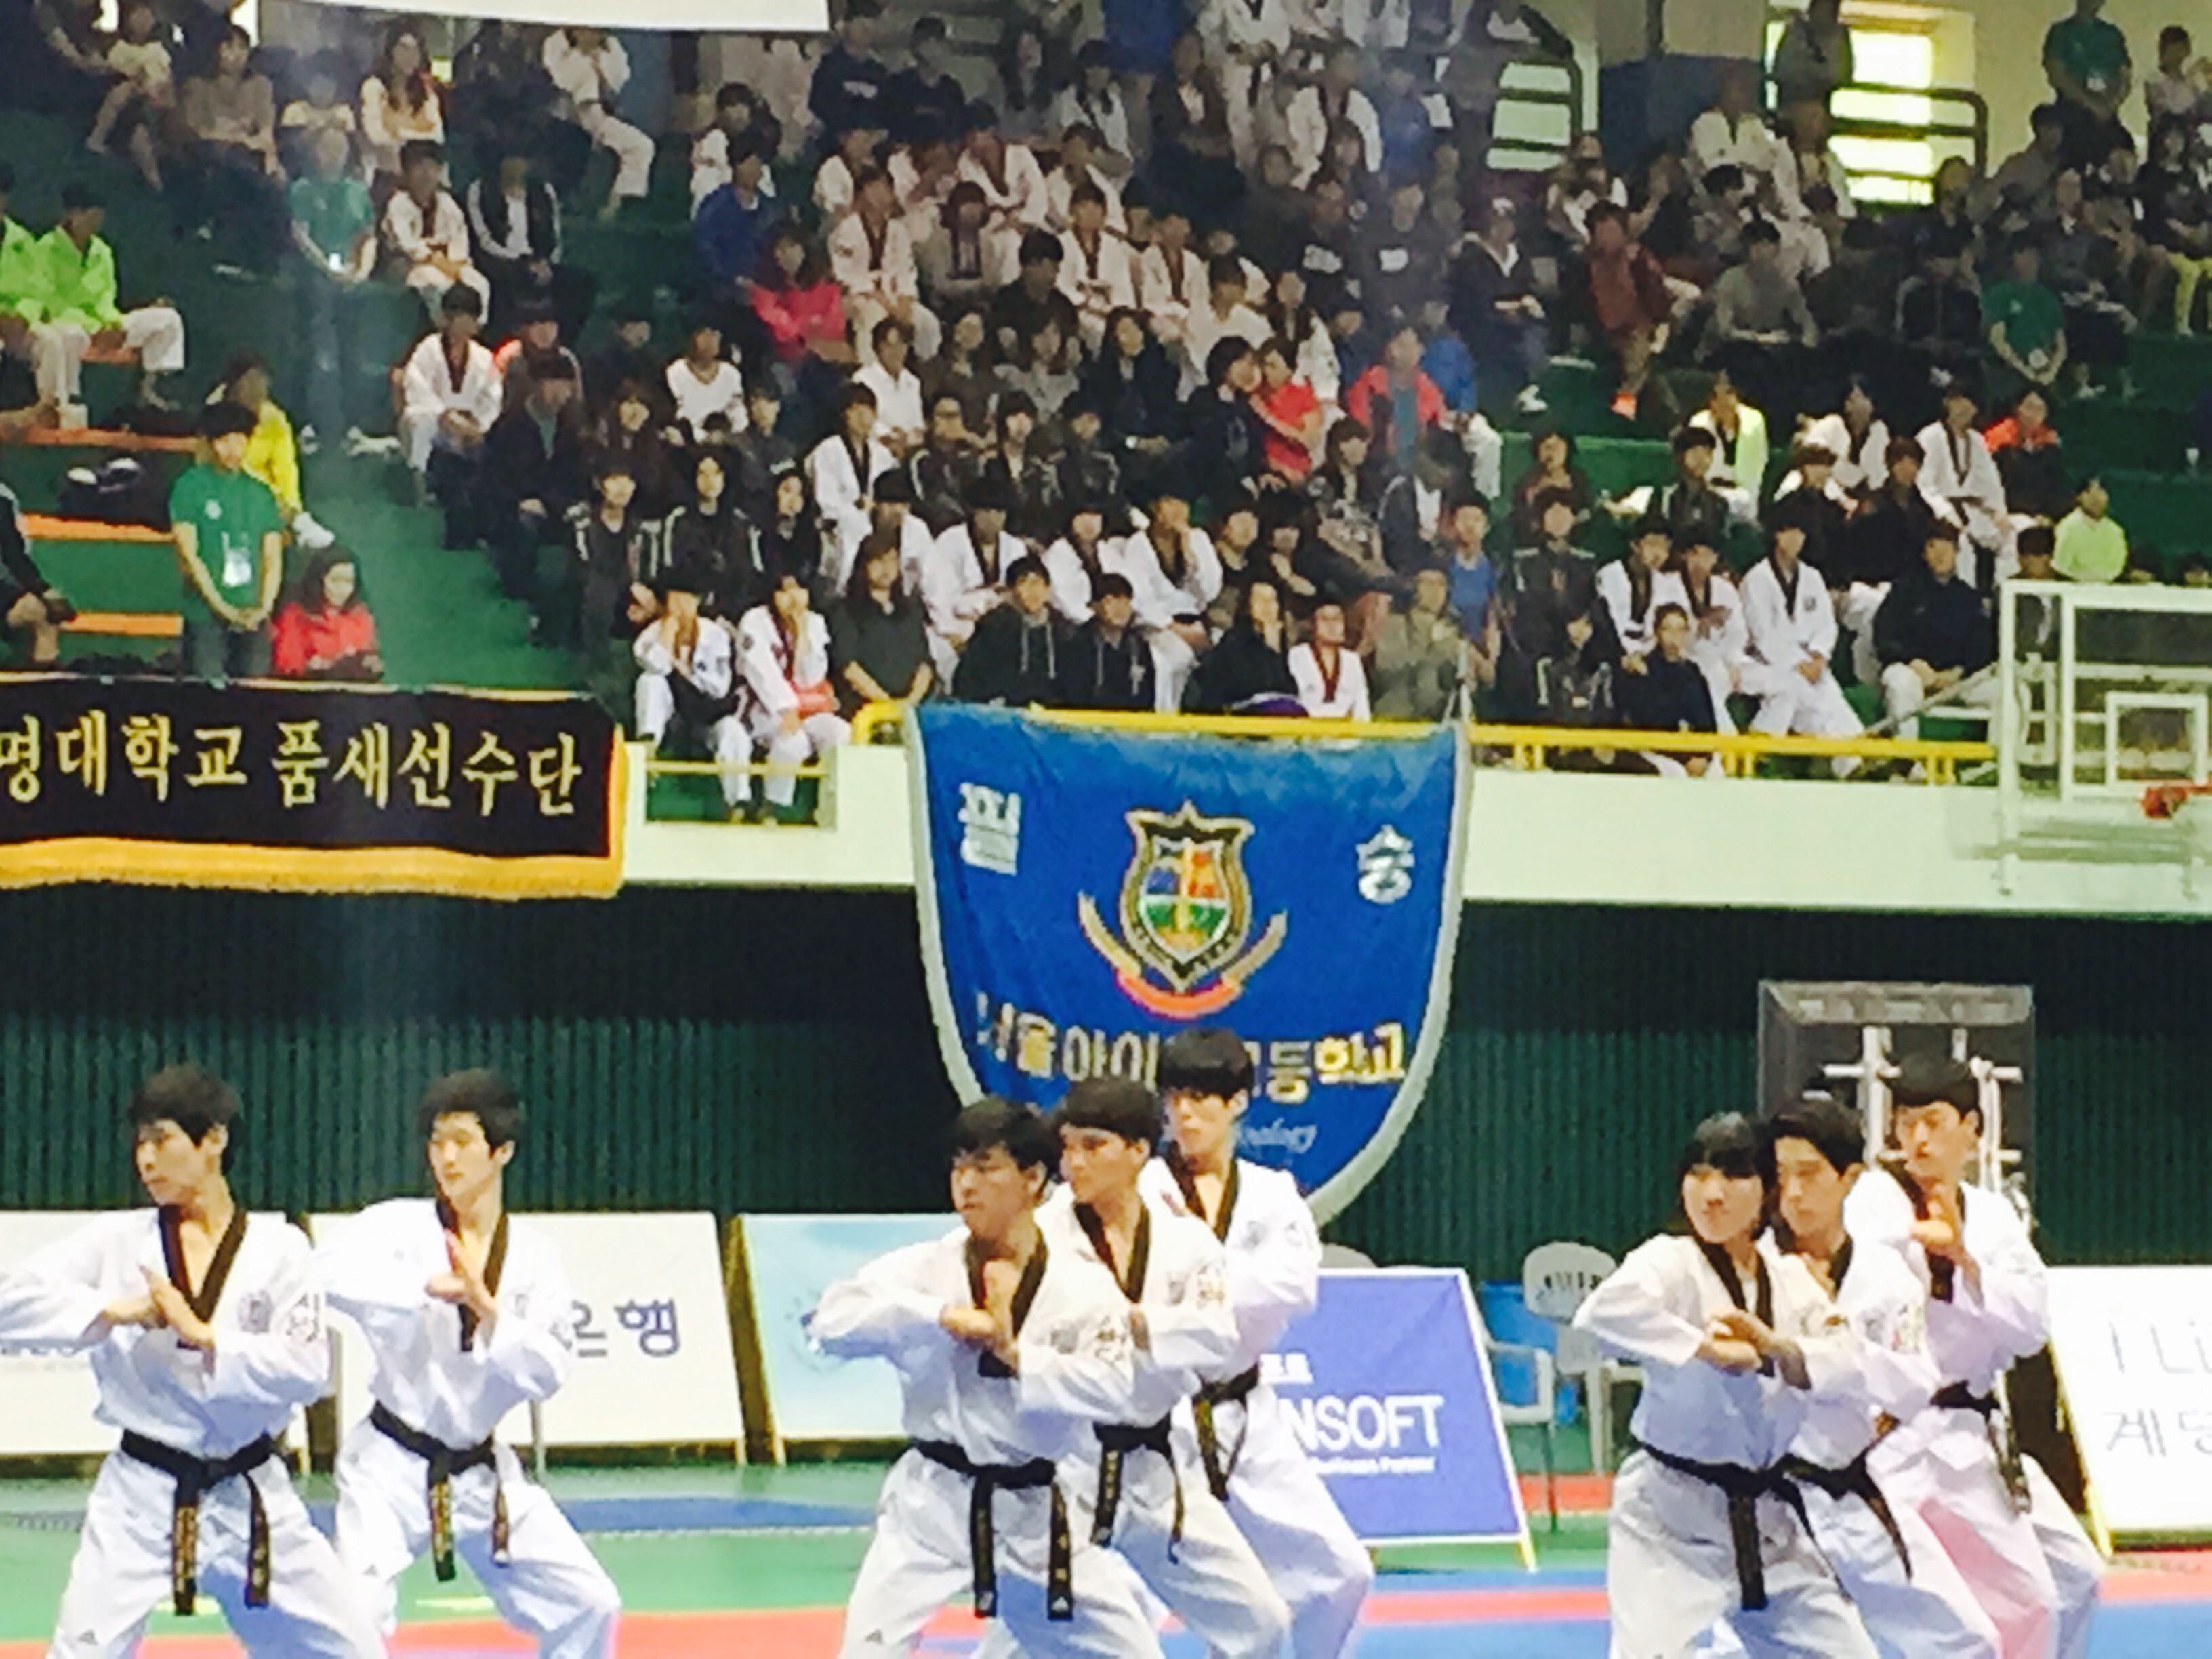 KMU National Taekwondo Poomsae Championship